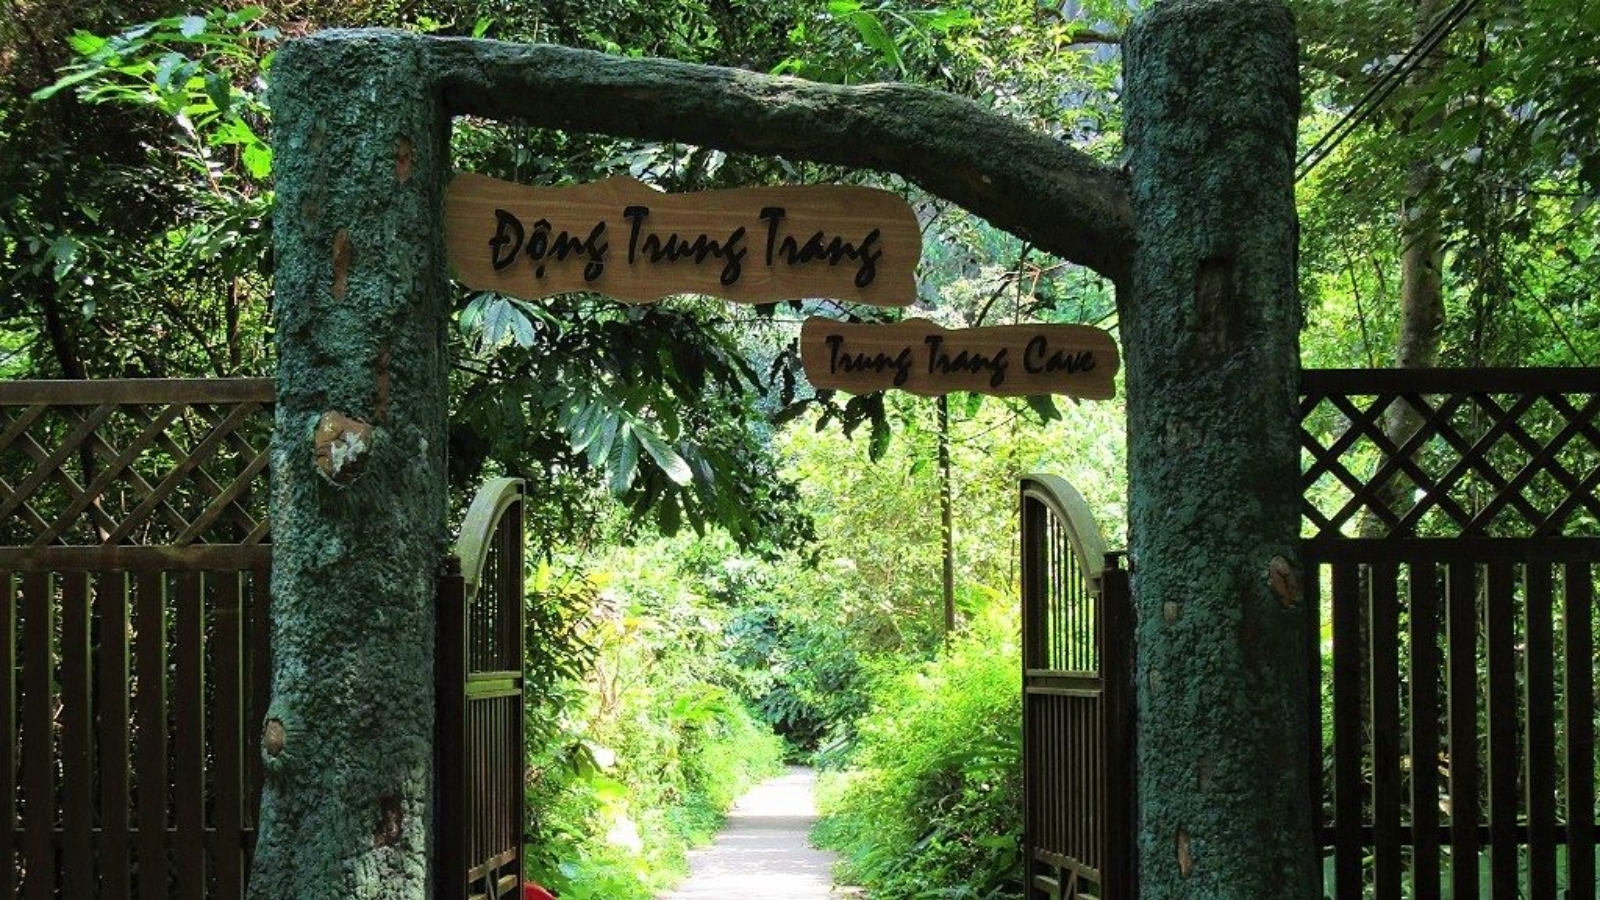 Trung Trang Cave Entrance